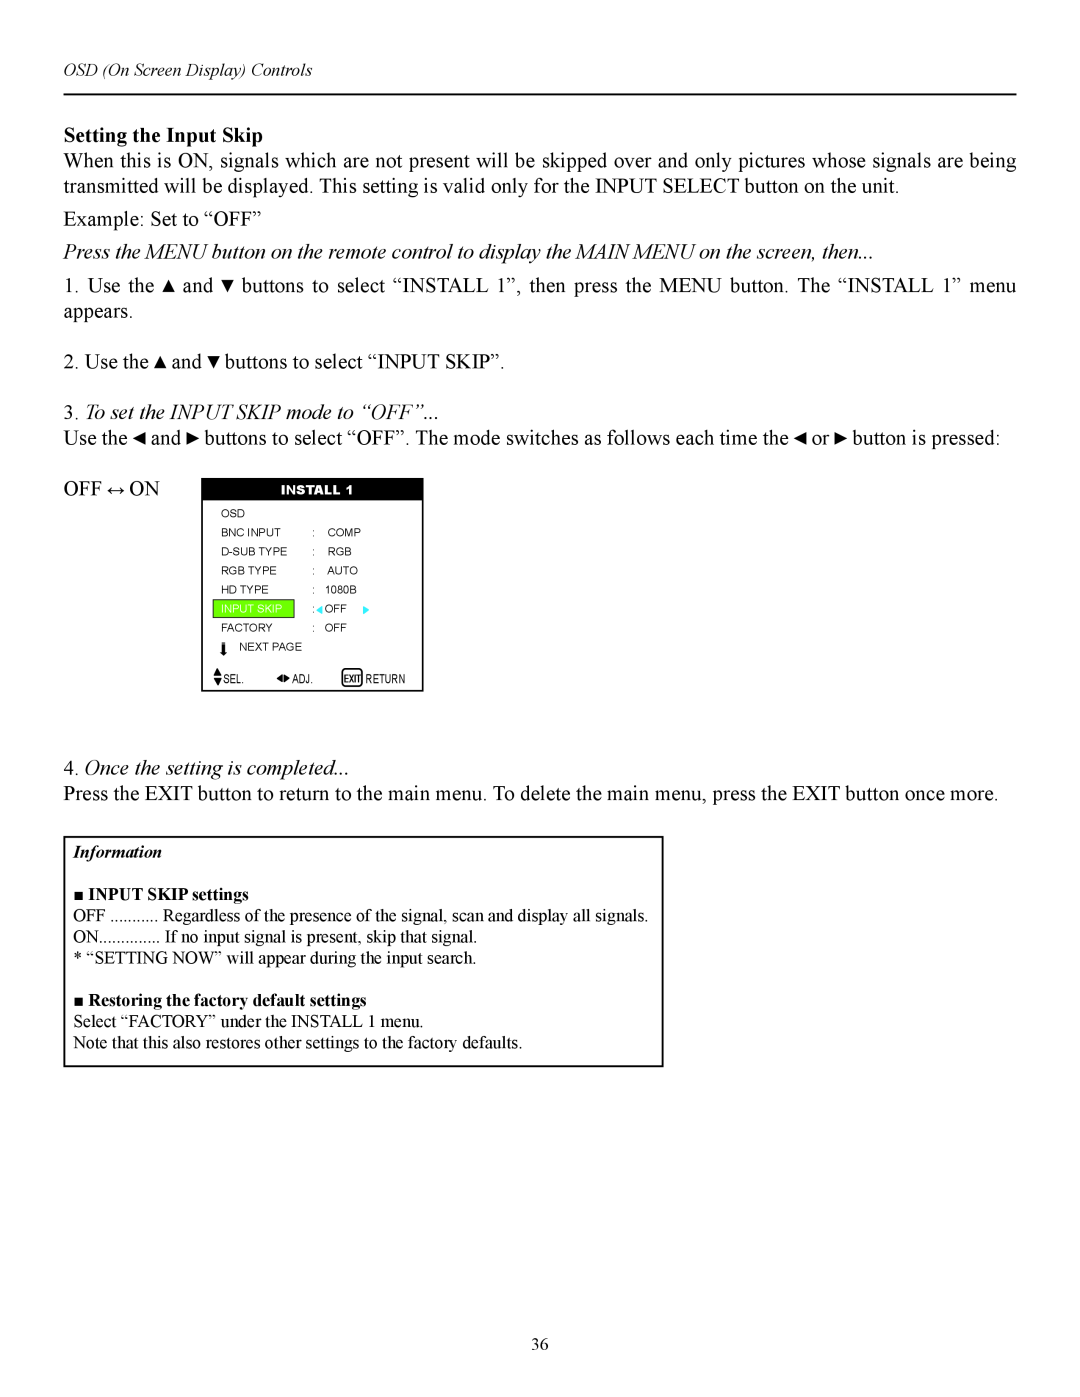 Runco CW-42i manual Setting the Input Skip, To set the INPUT SKIP mode to “OFF”, Once the setting is completed, Install 